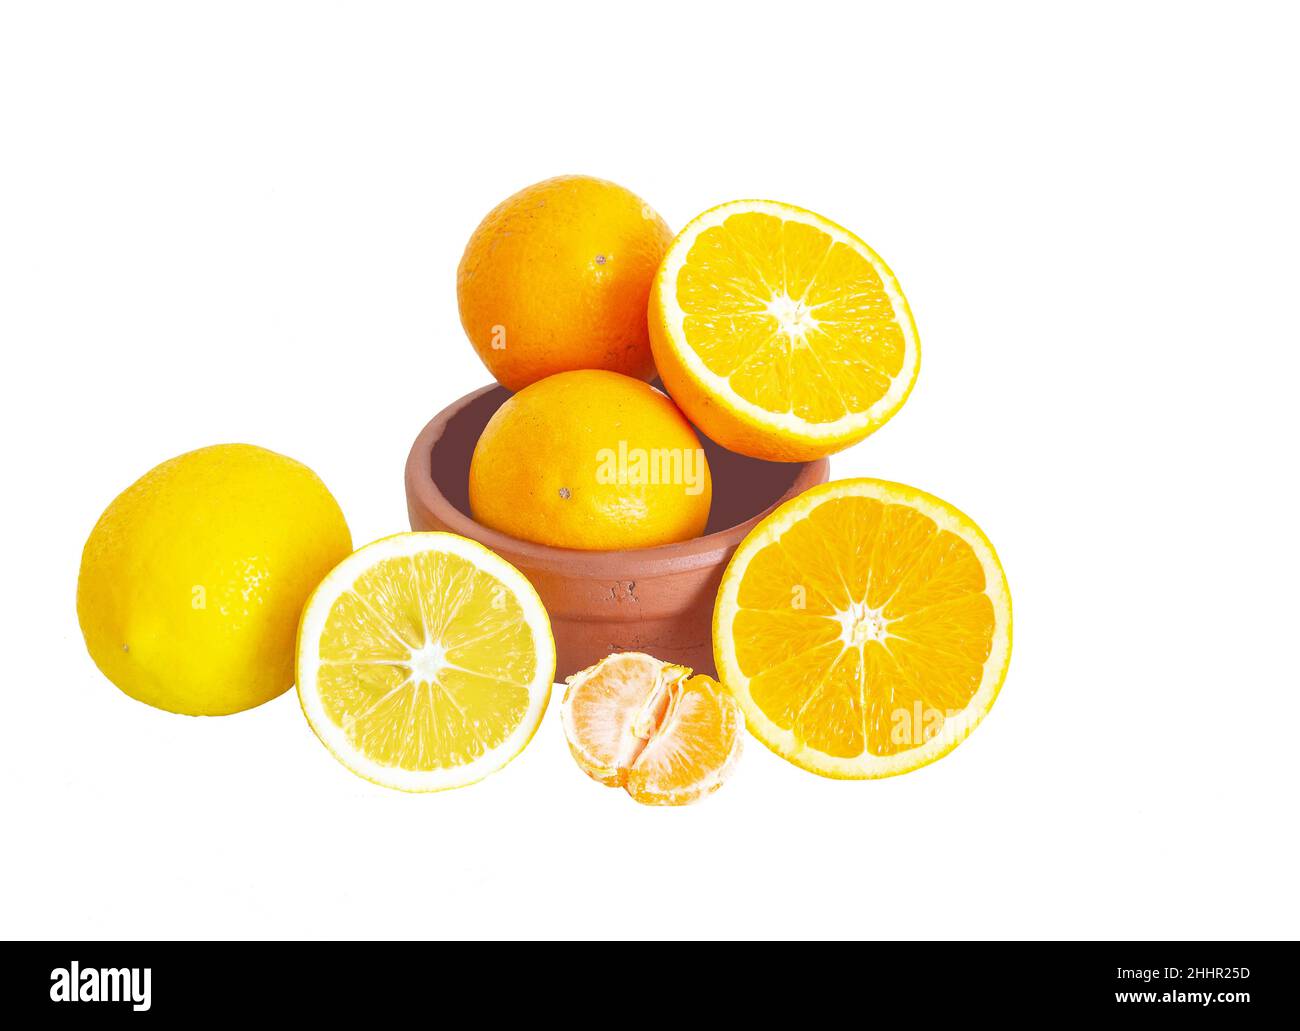 Still life, oranges, lemons and tangerines on a white background Stock Photo